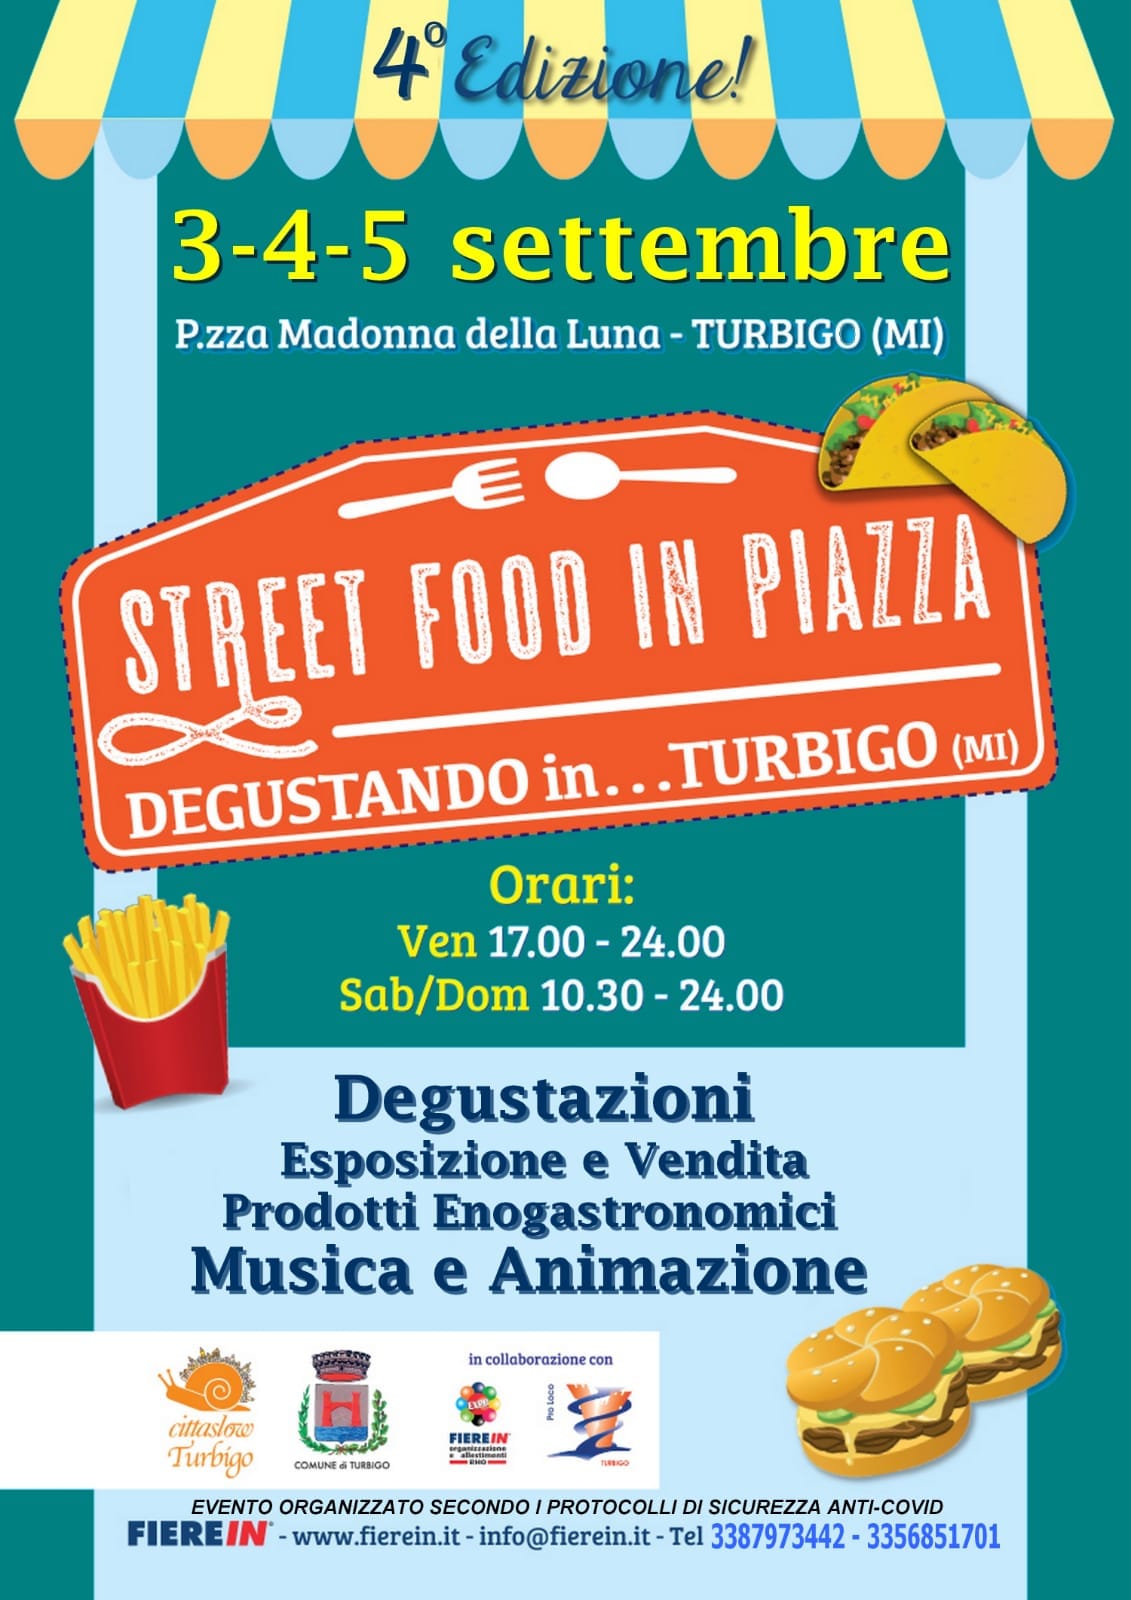 TURBIGO (MI): Degustando in Turbigo 2021 - Street Food in piazza